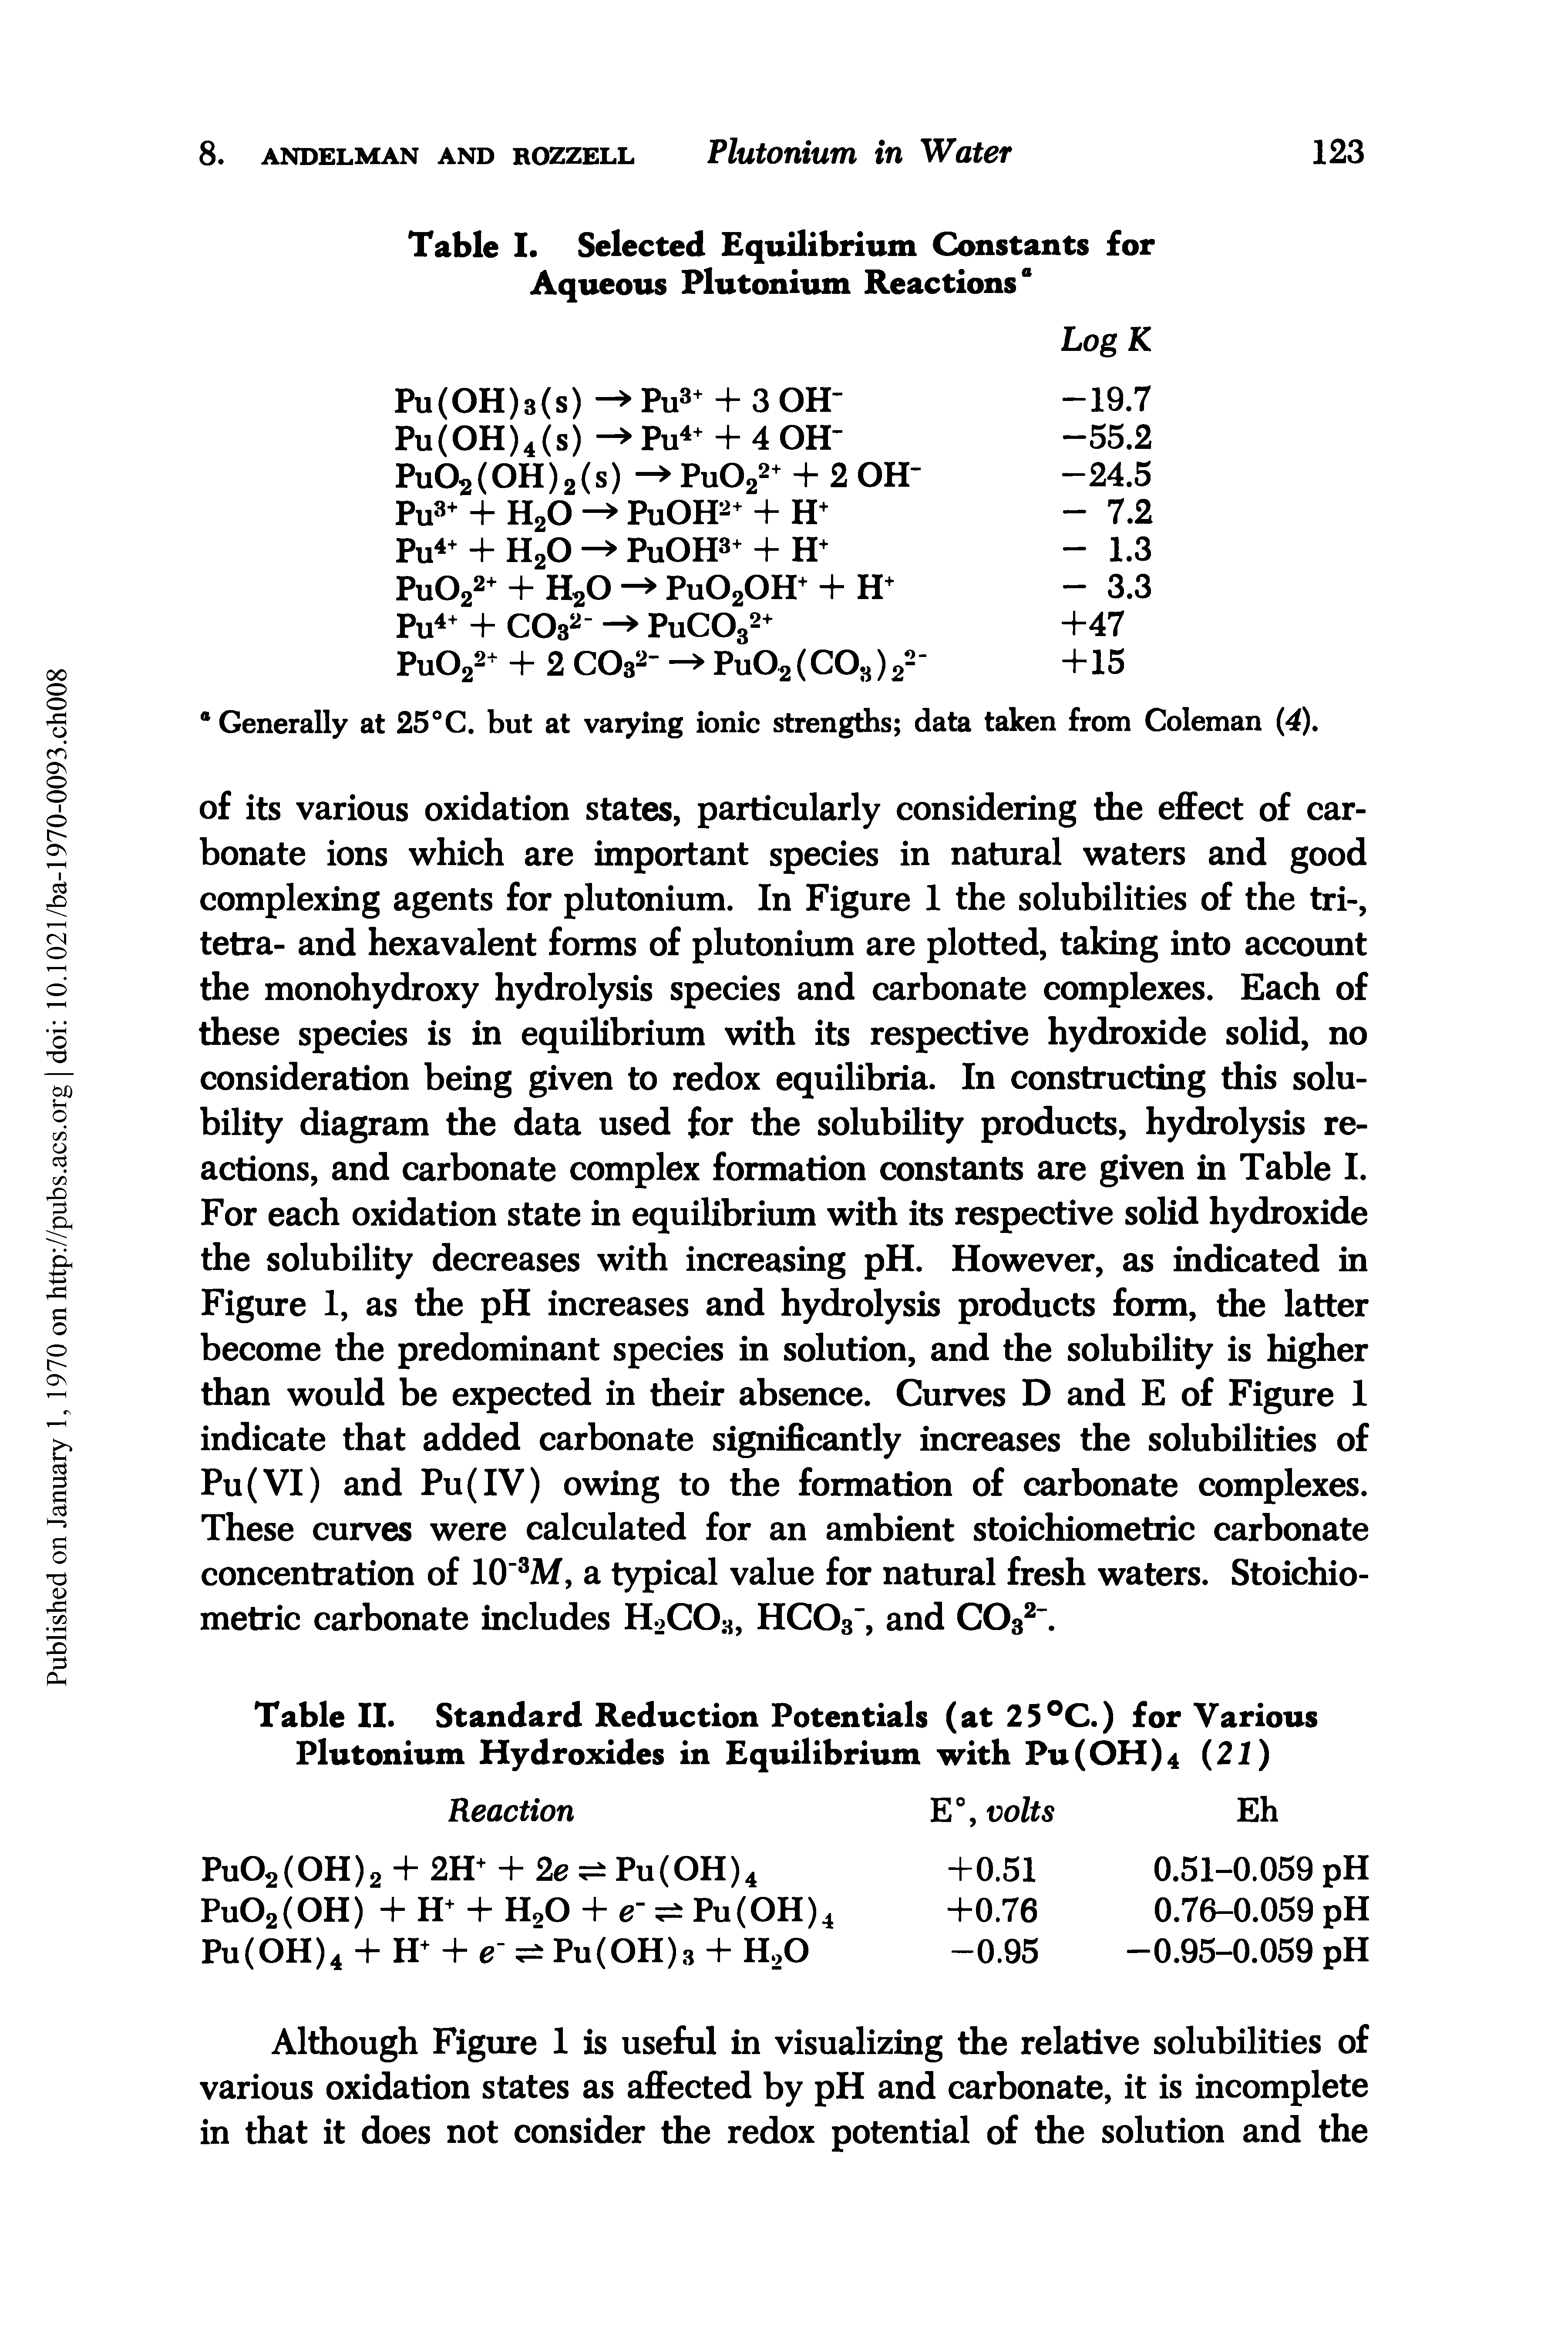 Table I. Selected Equilibrium Constants for Aqueous Plutonium Reactions0...